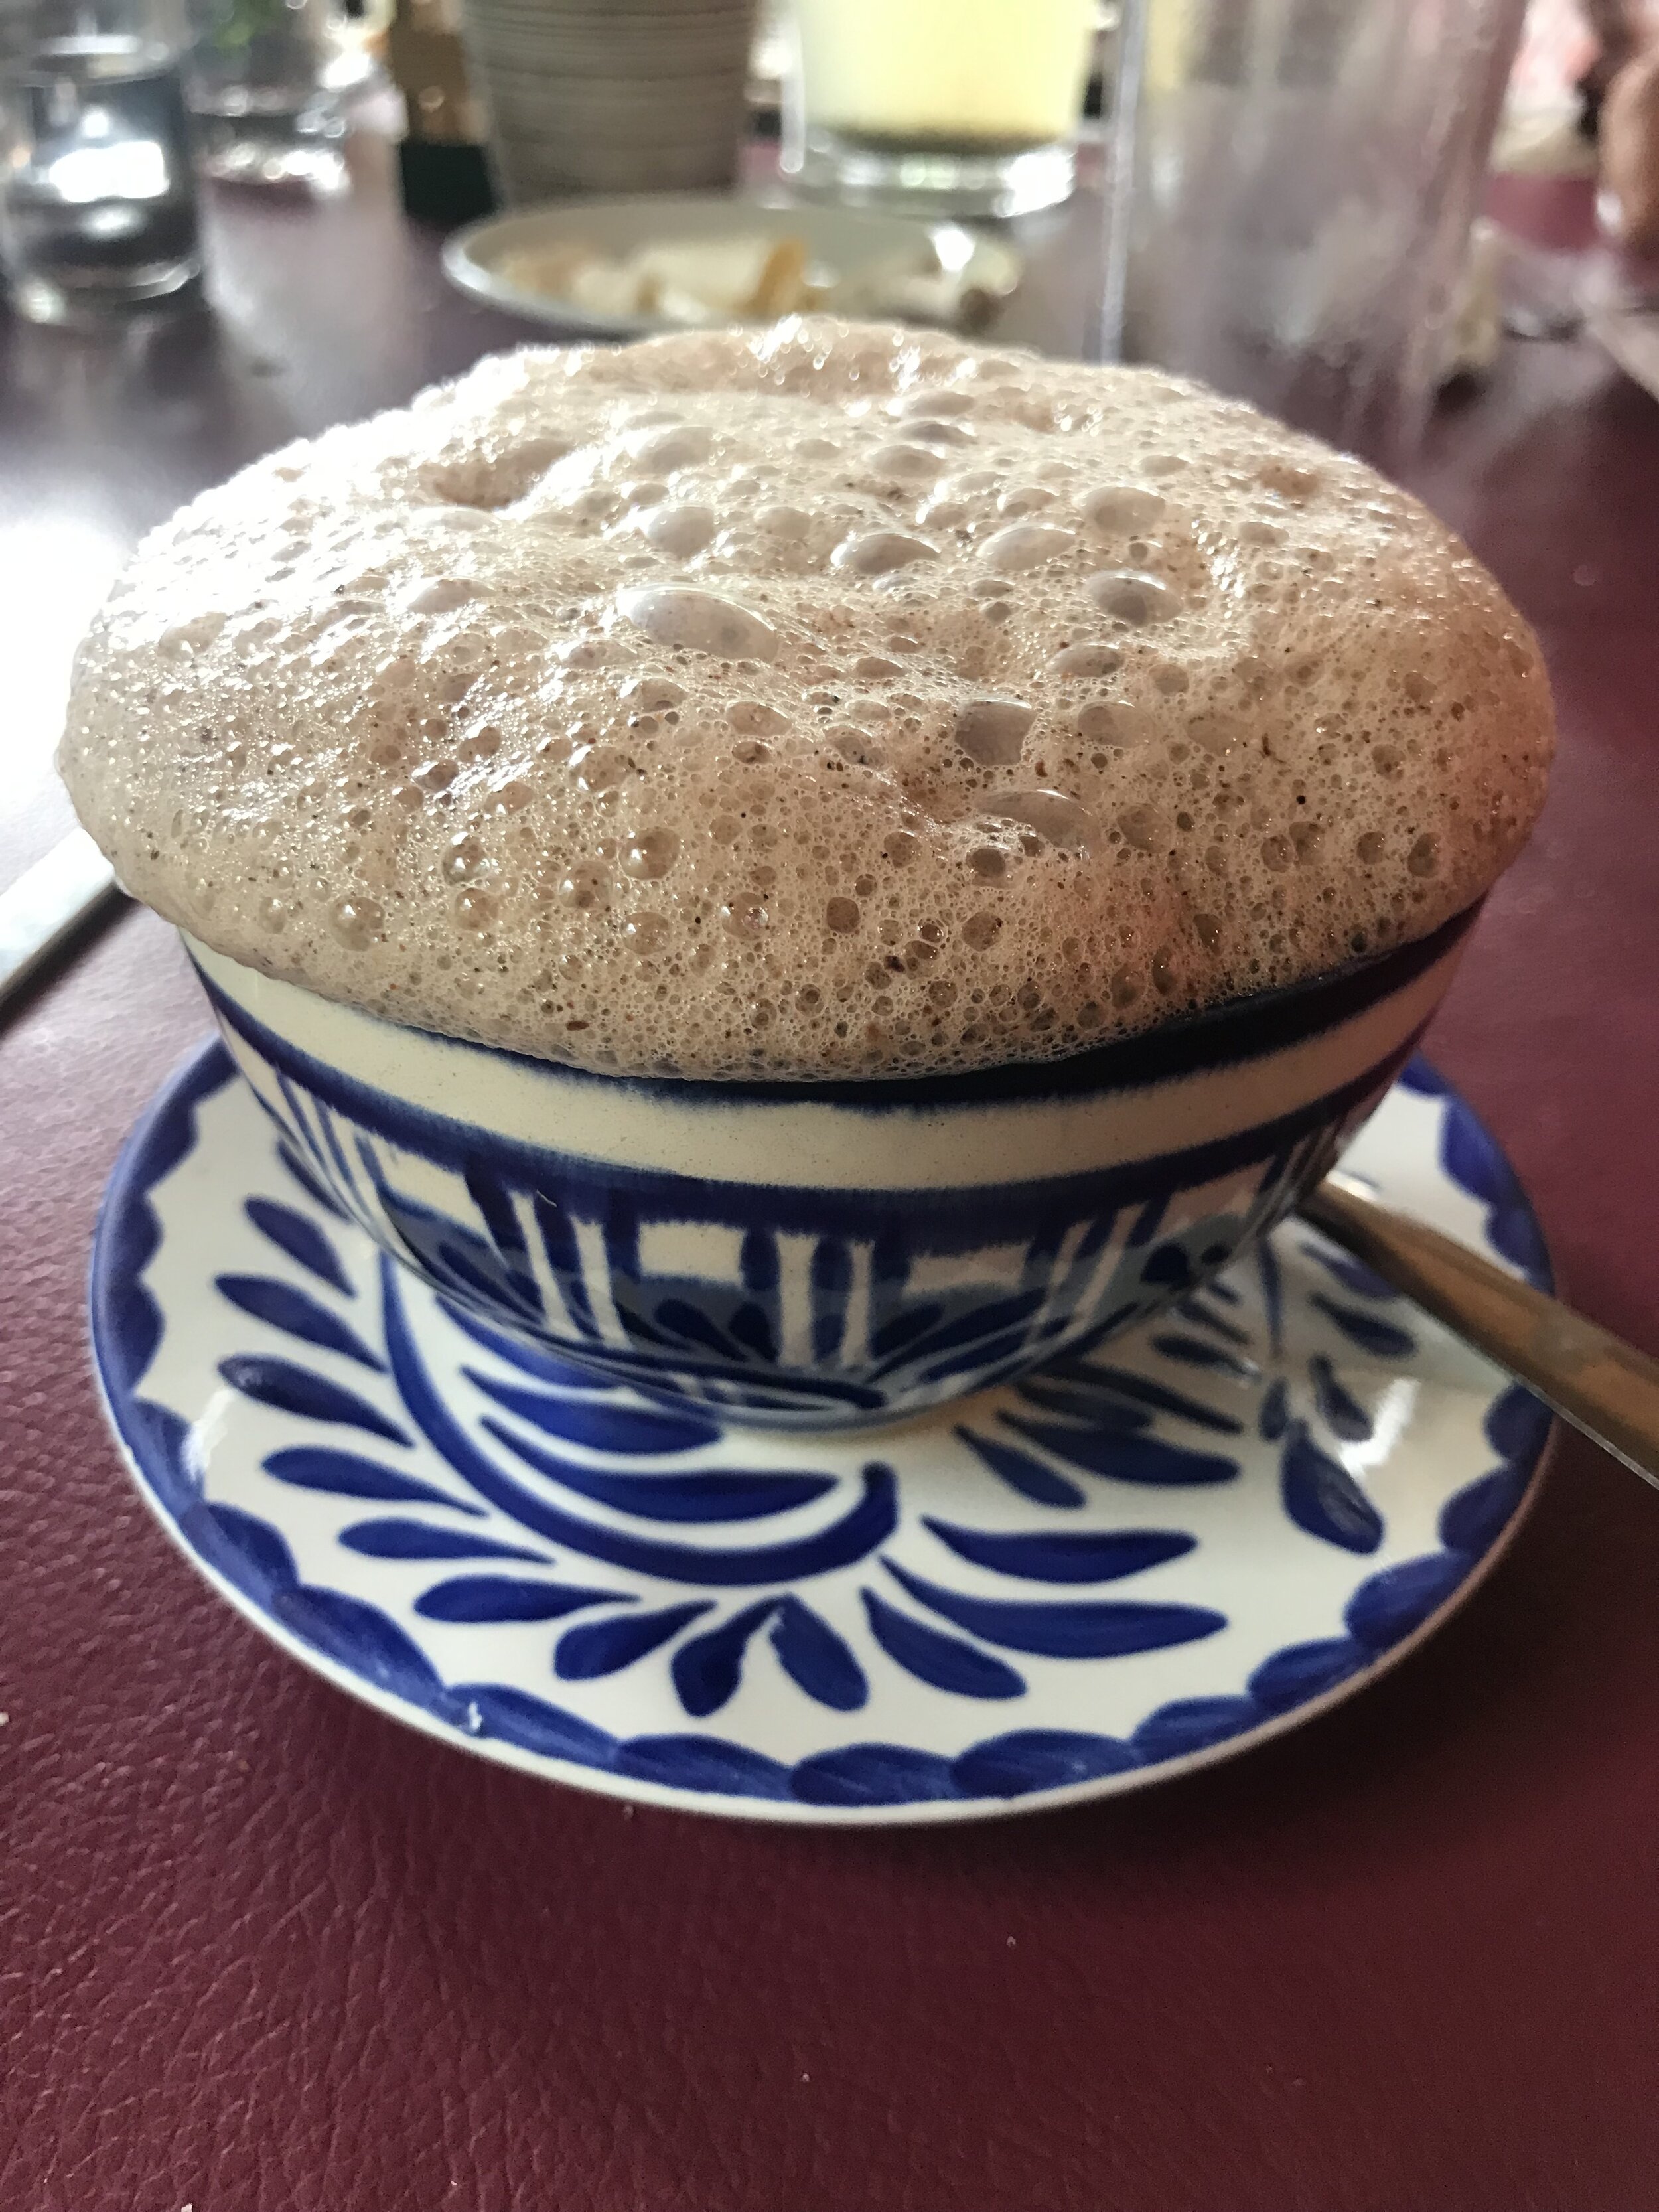 Hot Chocolate - Oaxaca style